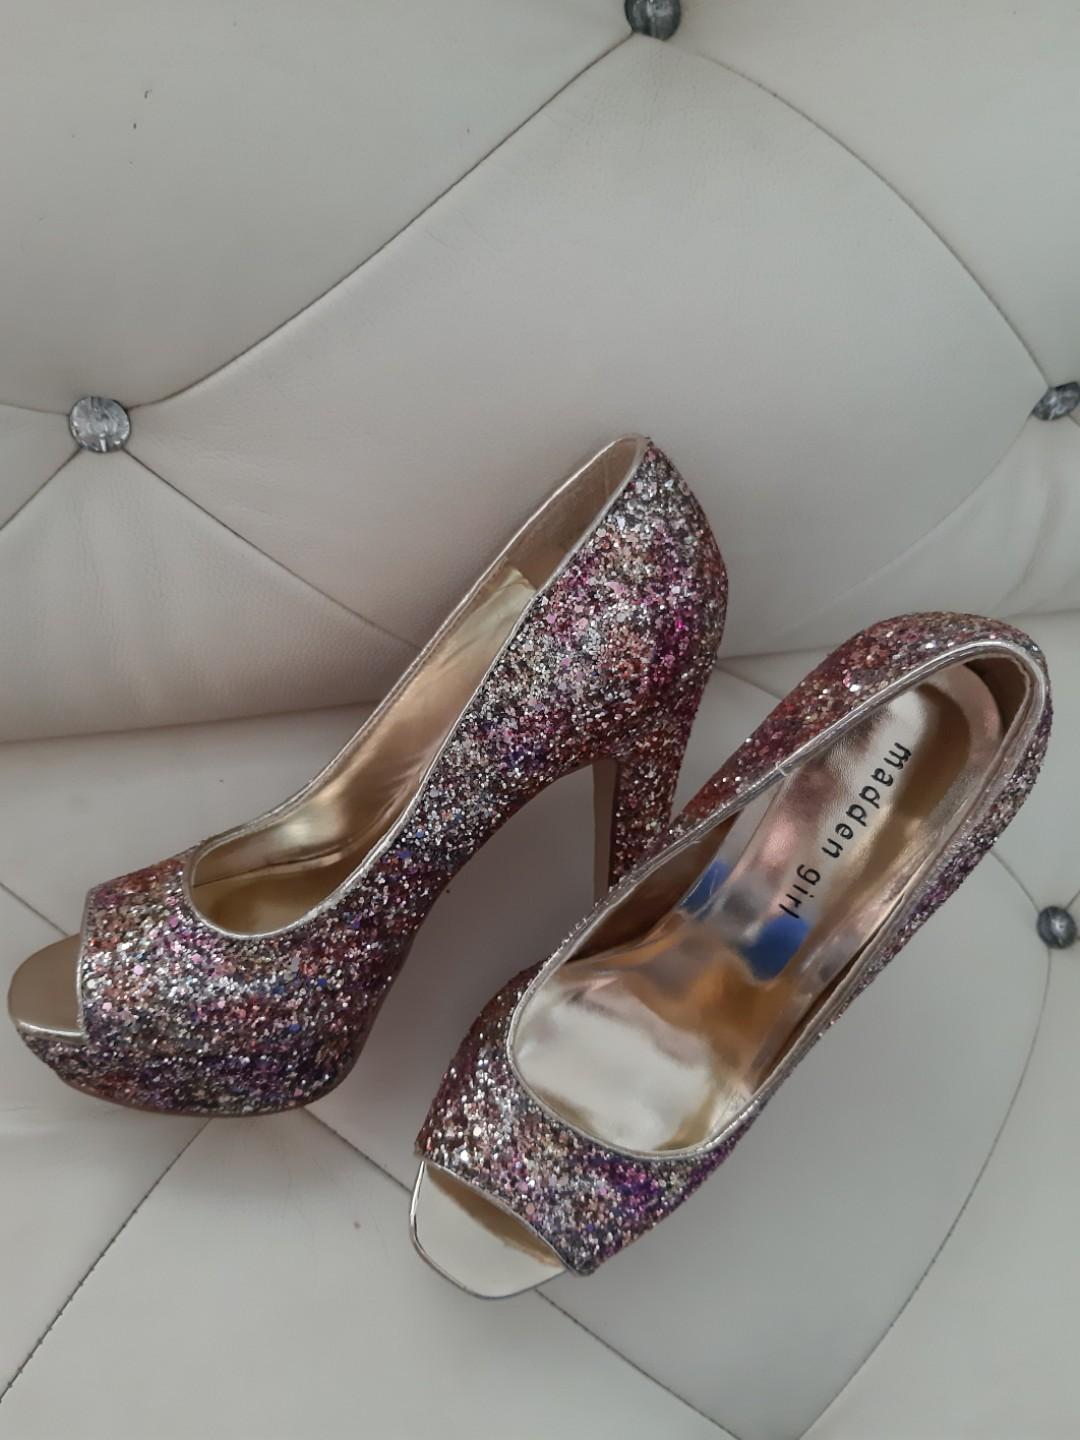 madden girl purple heels